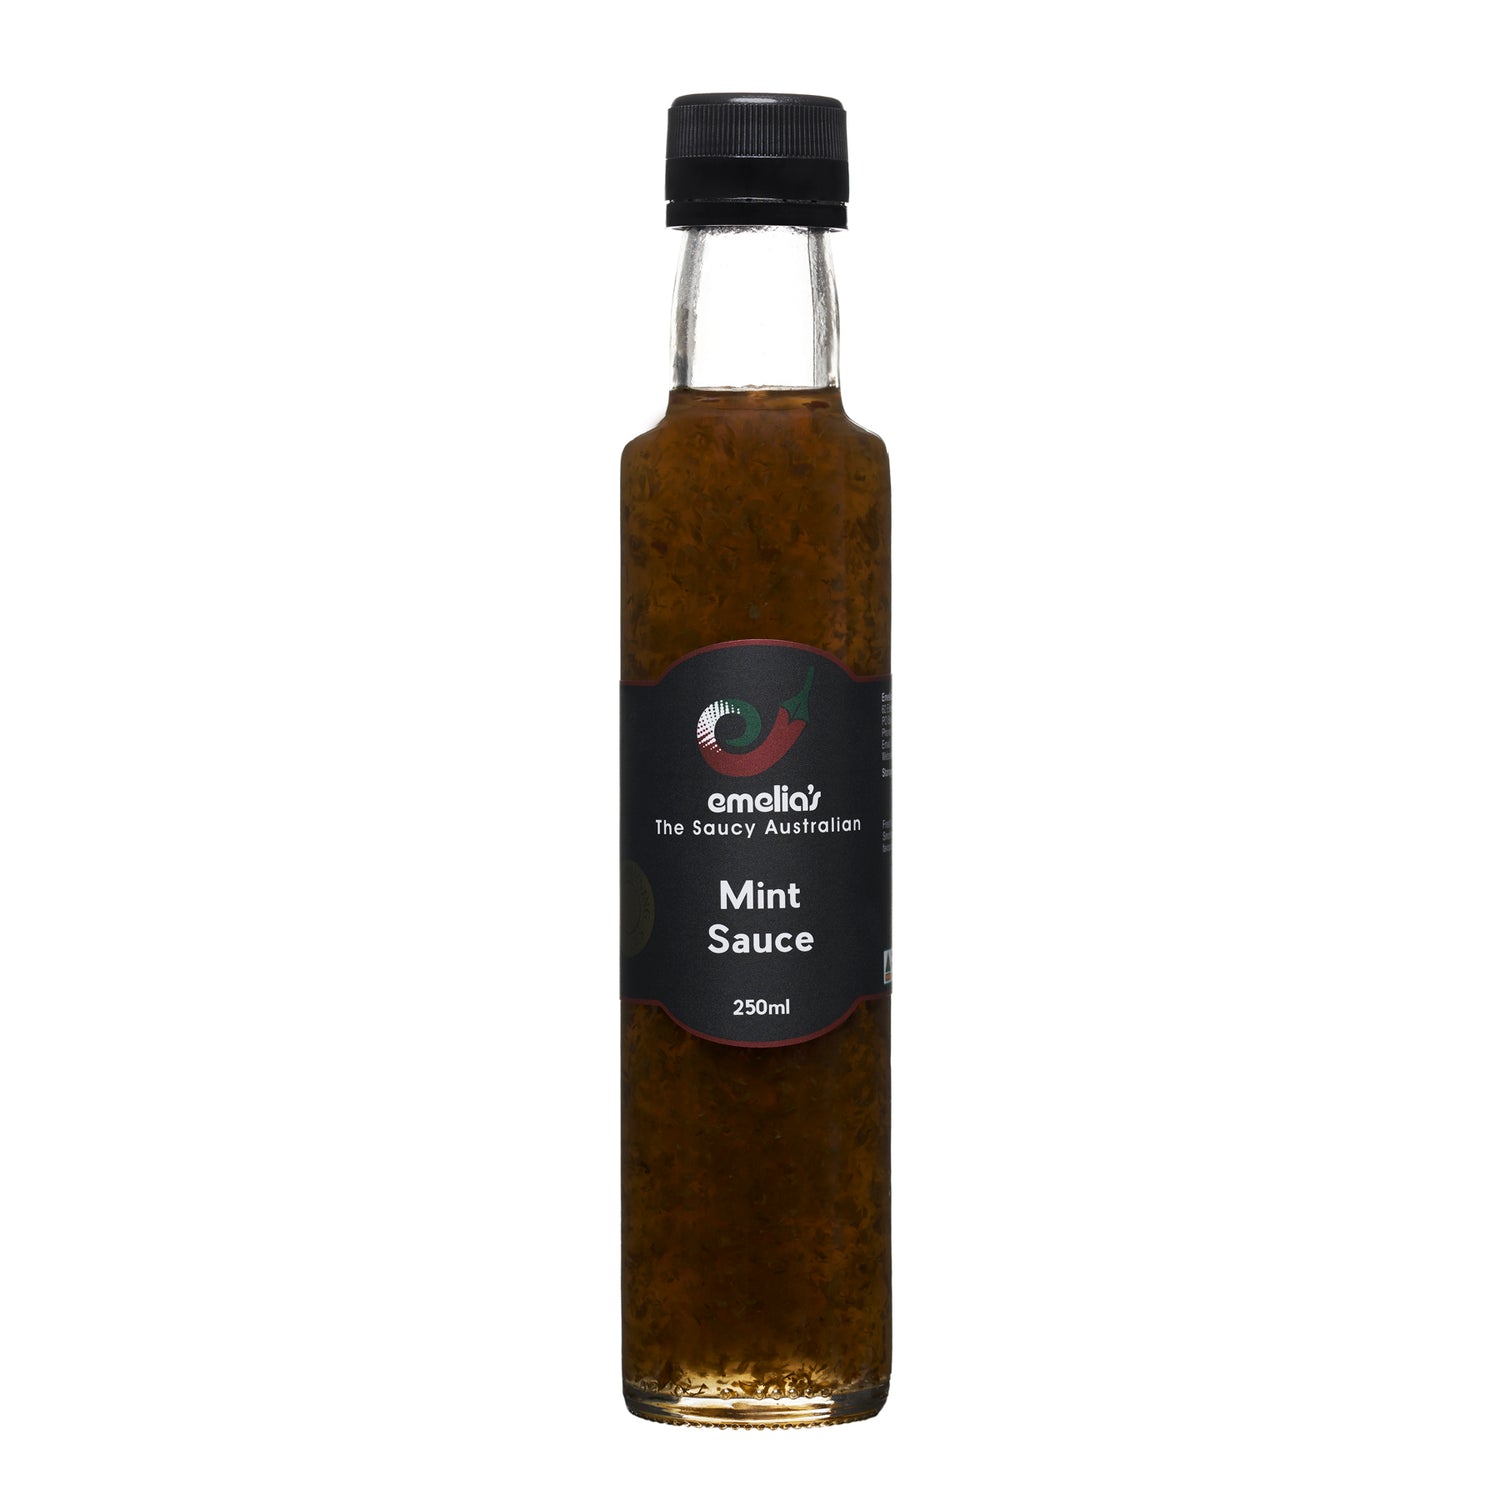 Mint Sauce – Emelia's The Saucy Australian